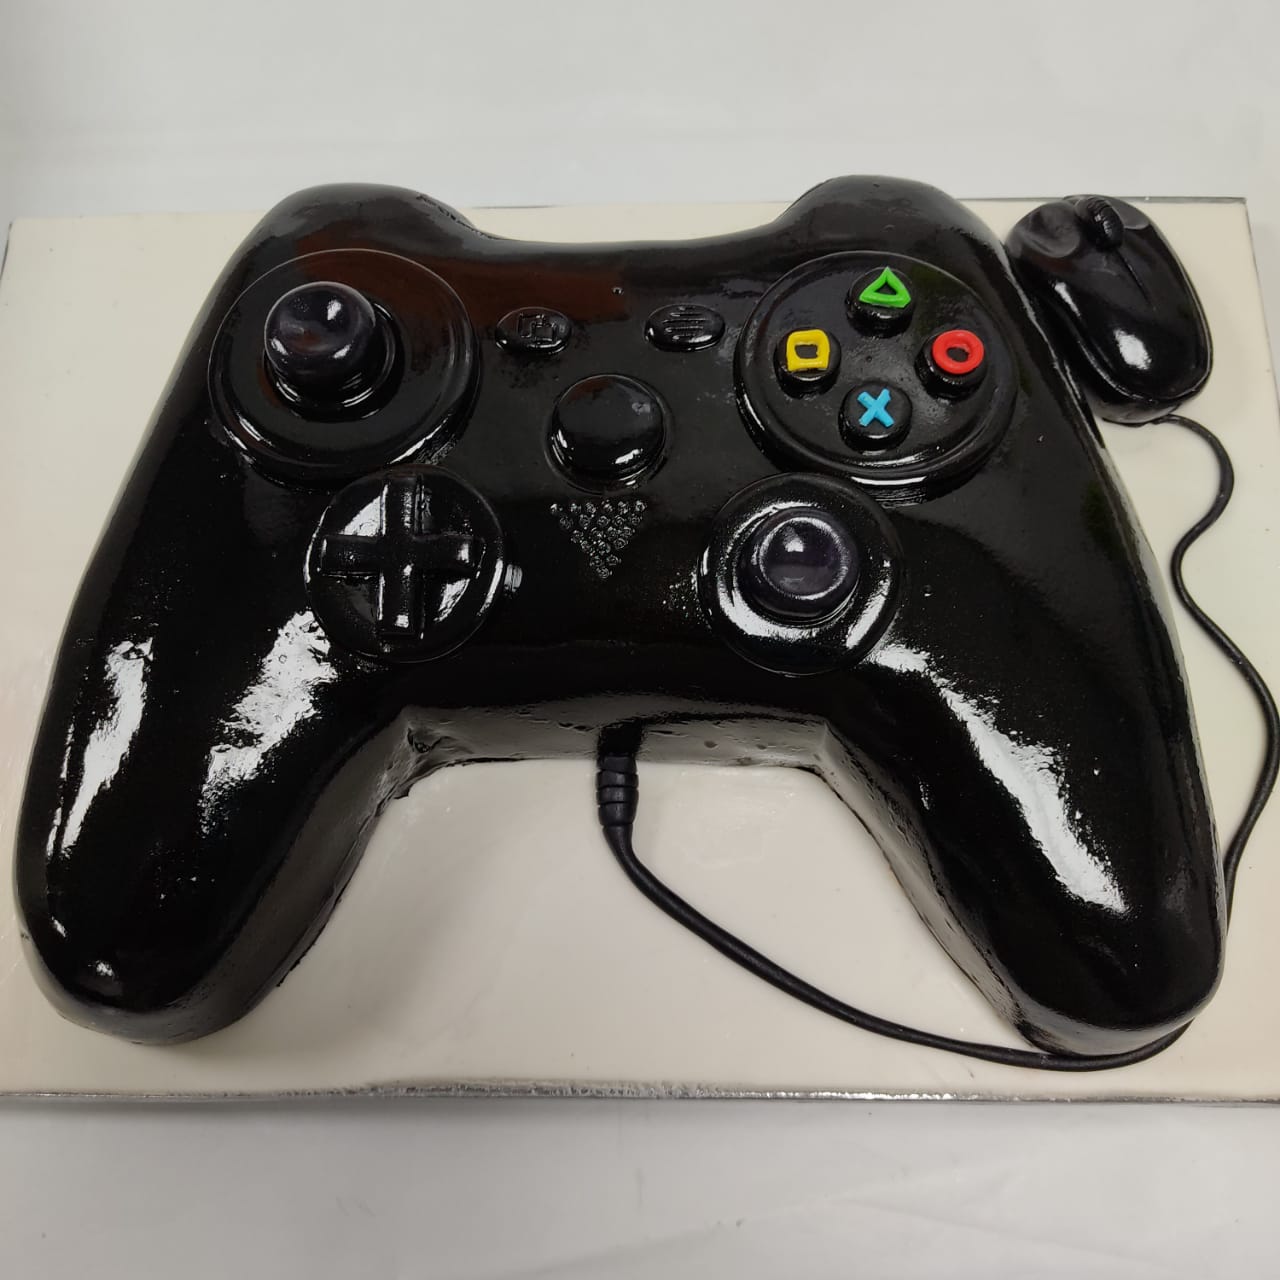 Gaming remote cake OC21